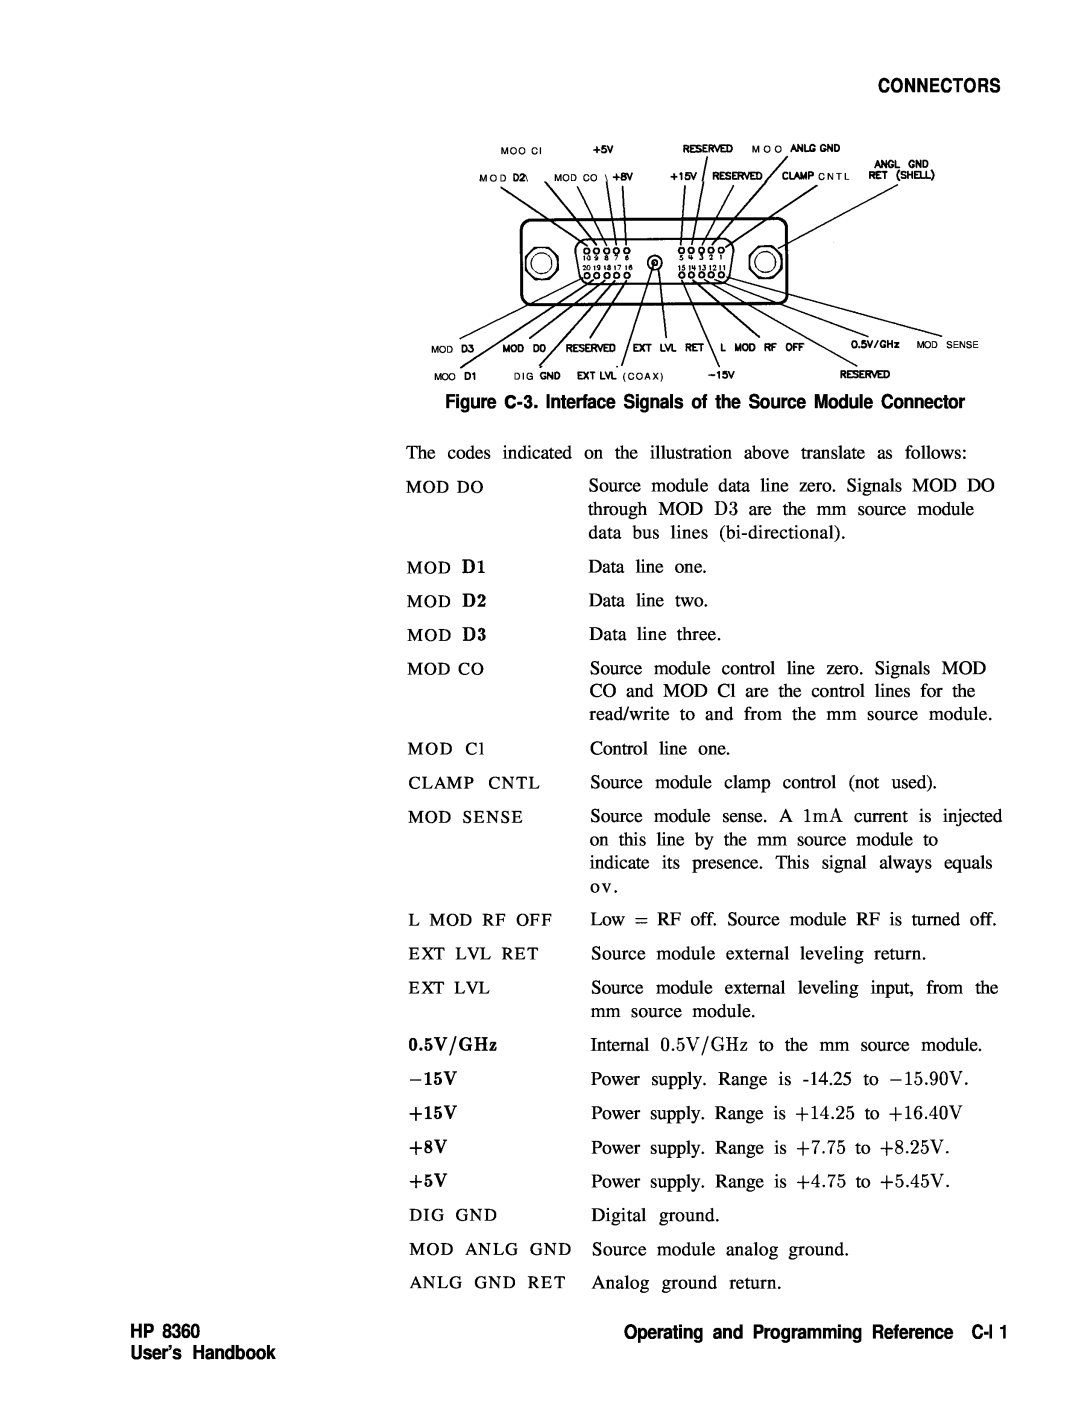 HP 83620A HP User’s Handbook, Connectors, Figure C-3. Interface Signals of the Source Module Connector, MOD Dl, MOD D2 